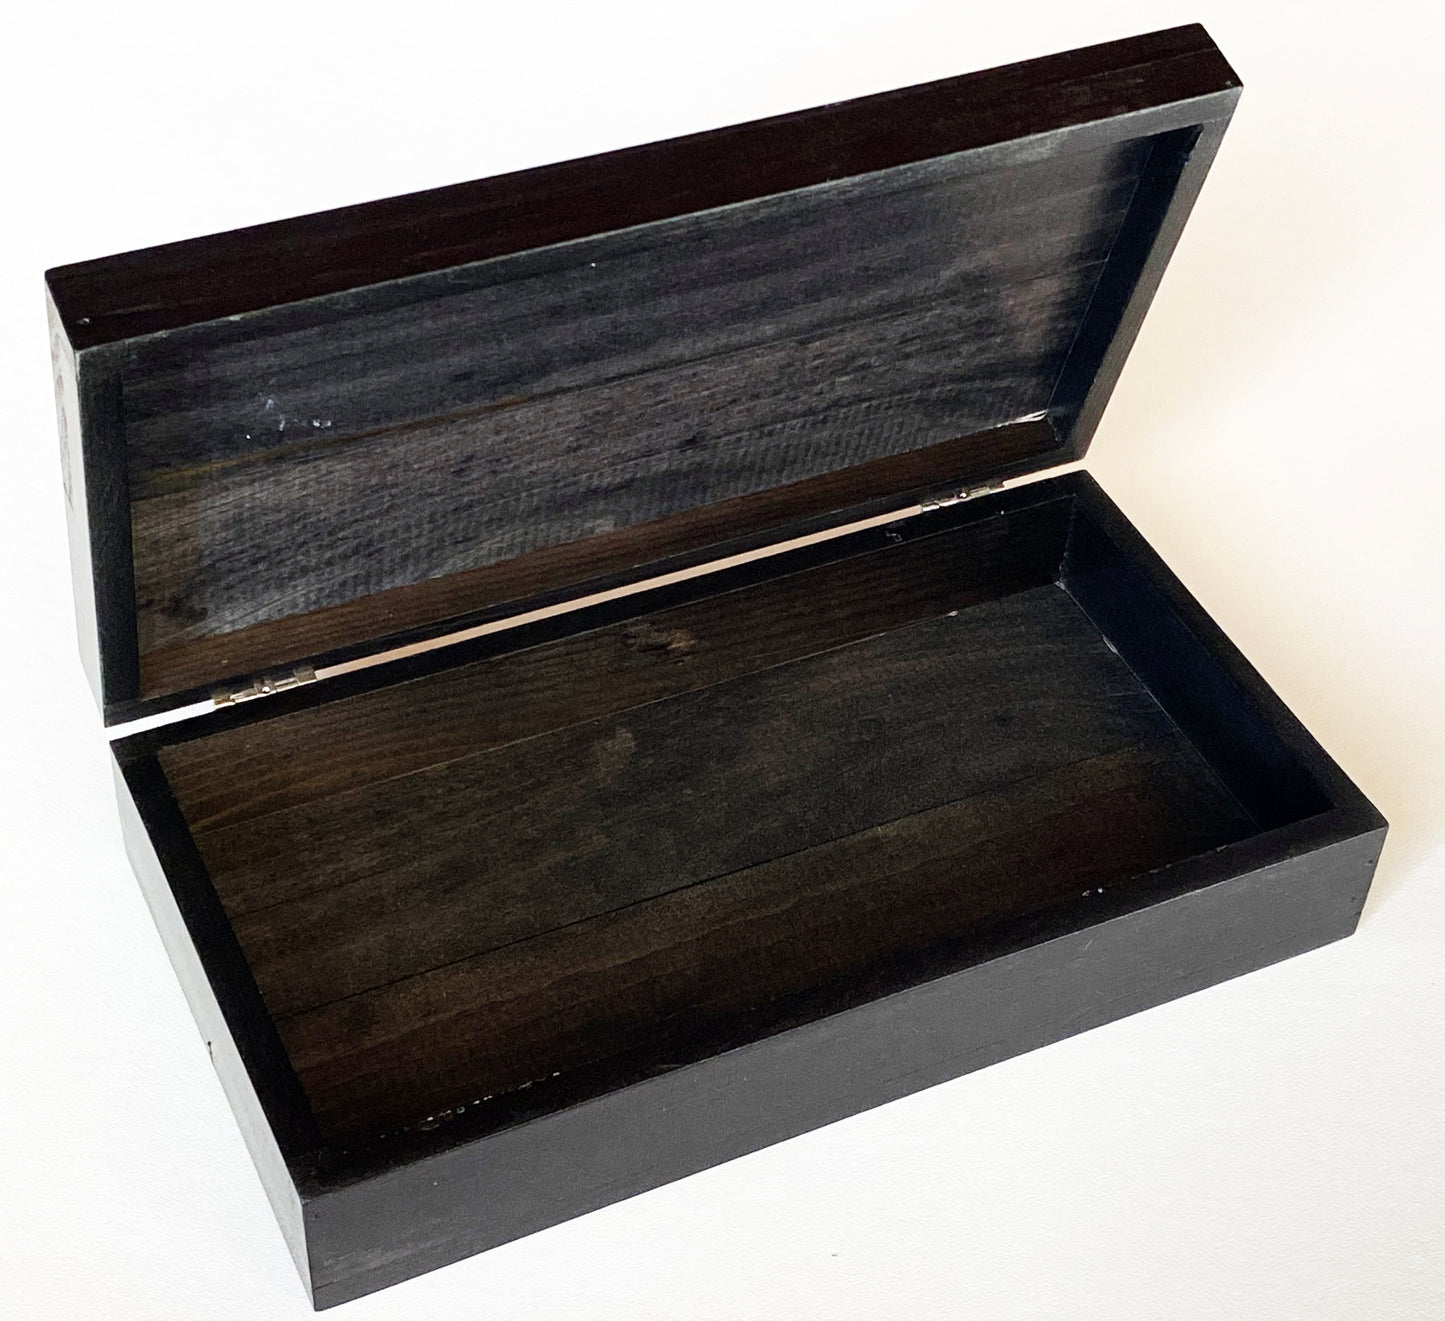 Black Presentation Box, 10" x 5" x 1.75"